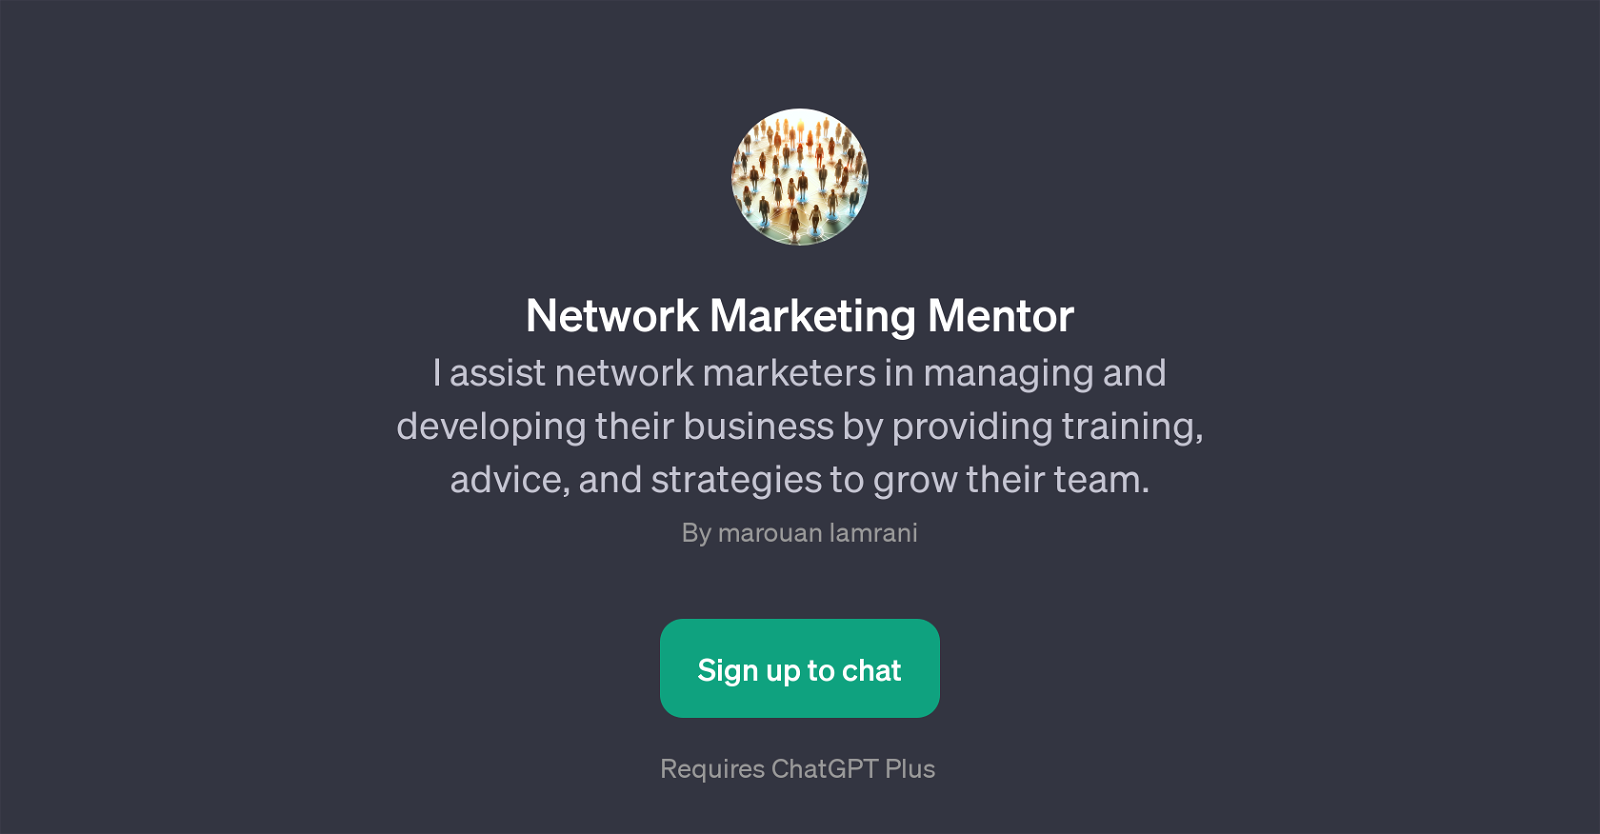 Network Marketing Mentor website